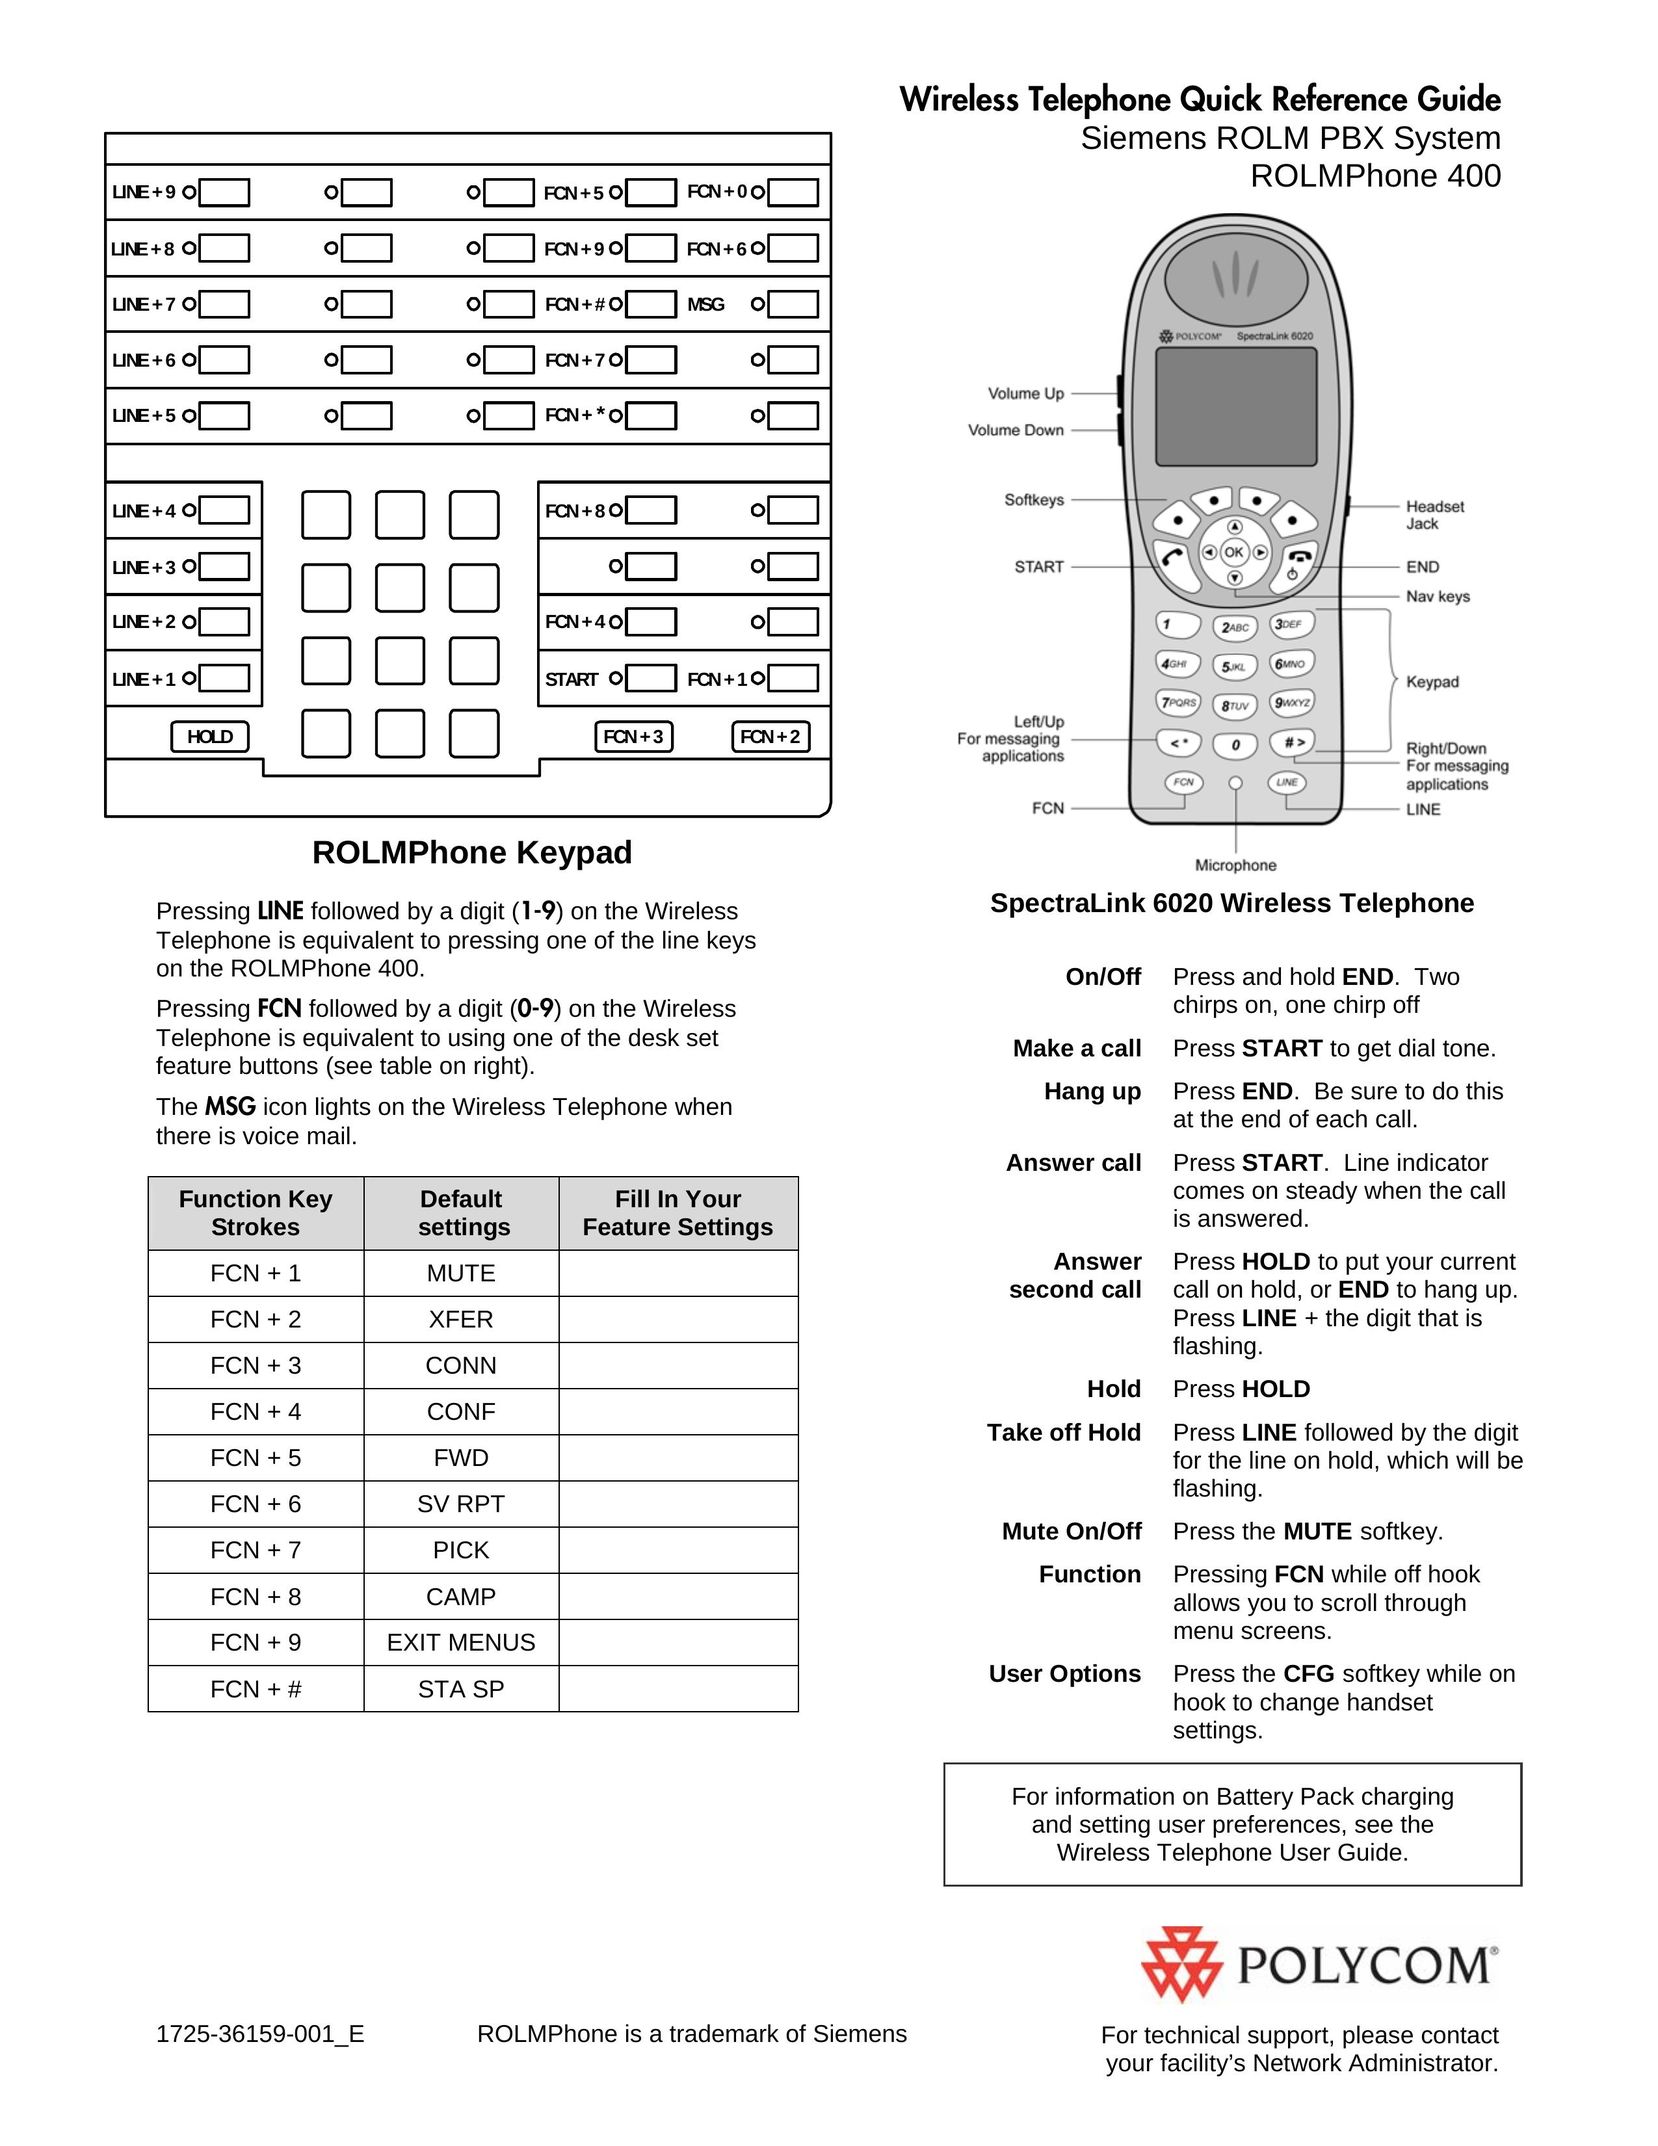 Polycom ROLM PBX Cell Phone User Manual